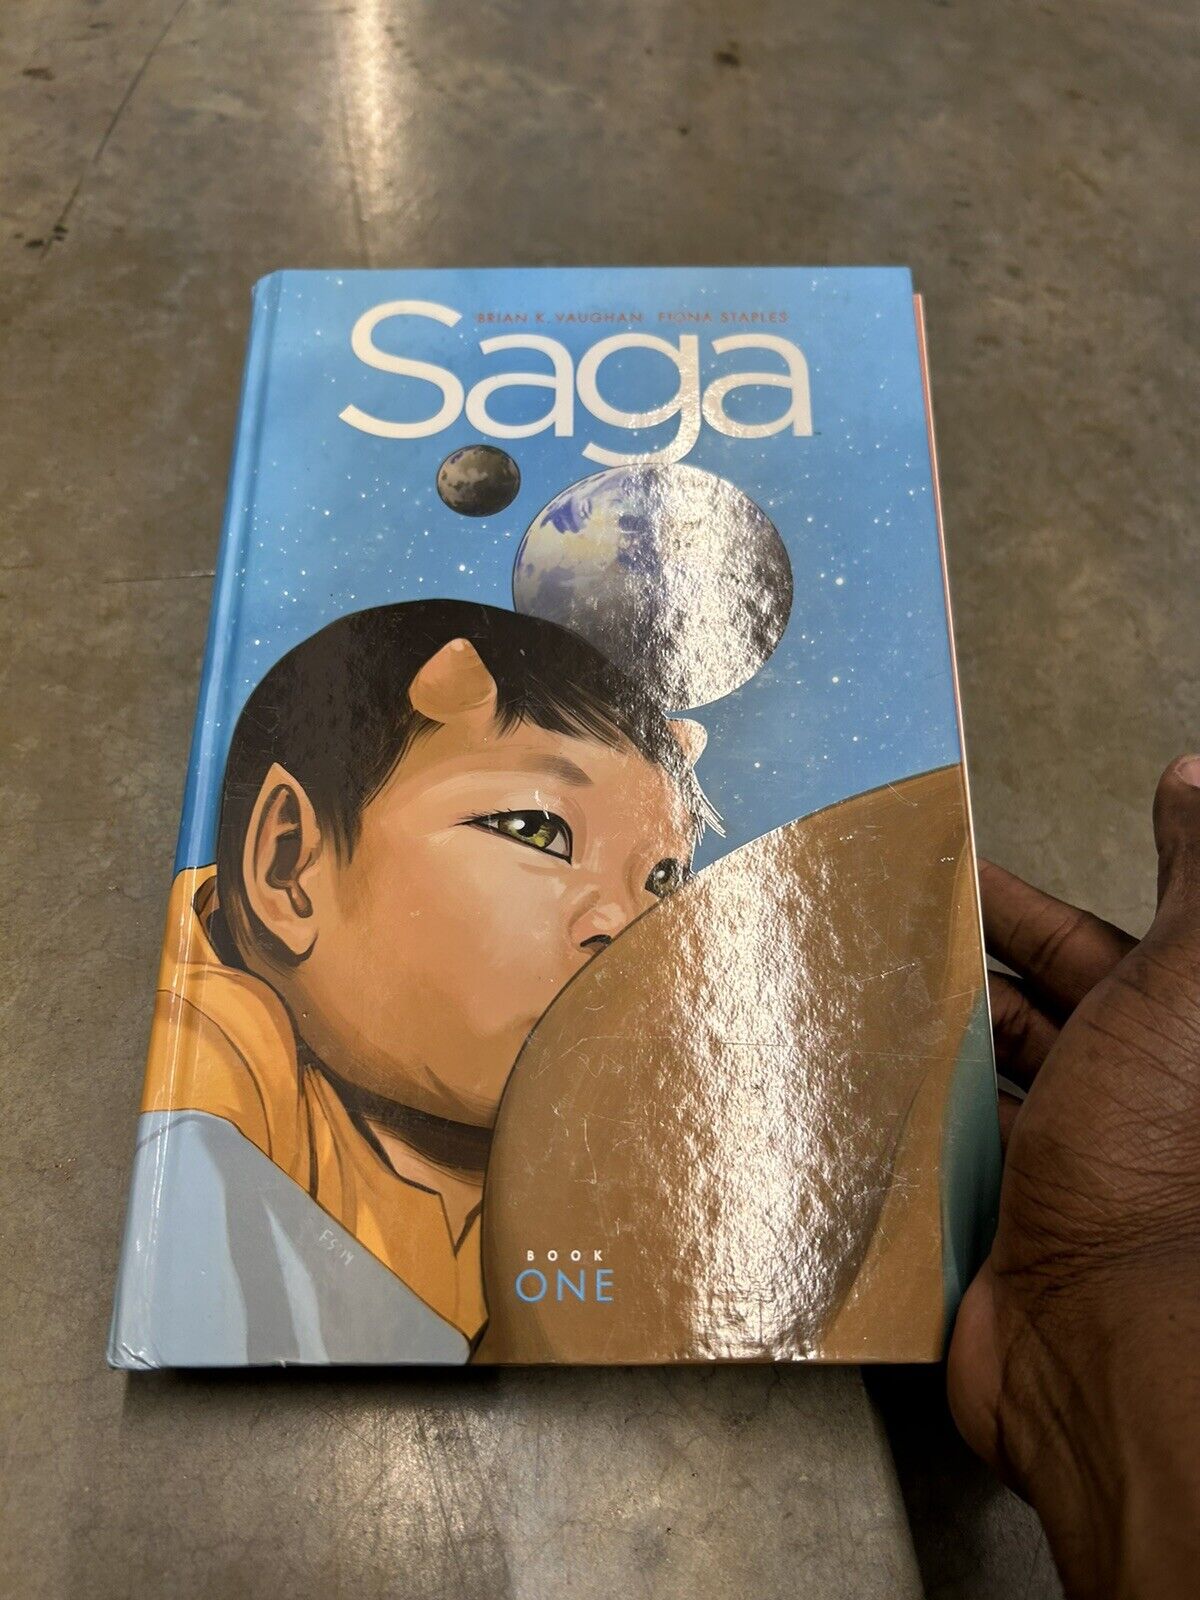 Saga #1 (Image Comics, November 2014) Hardcover